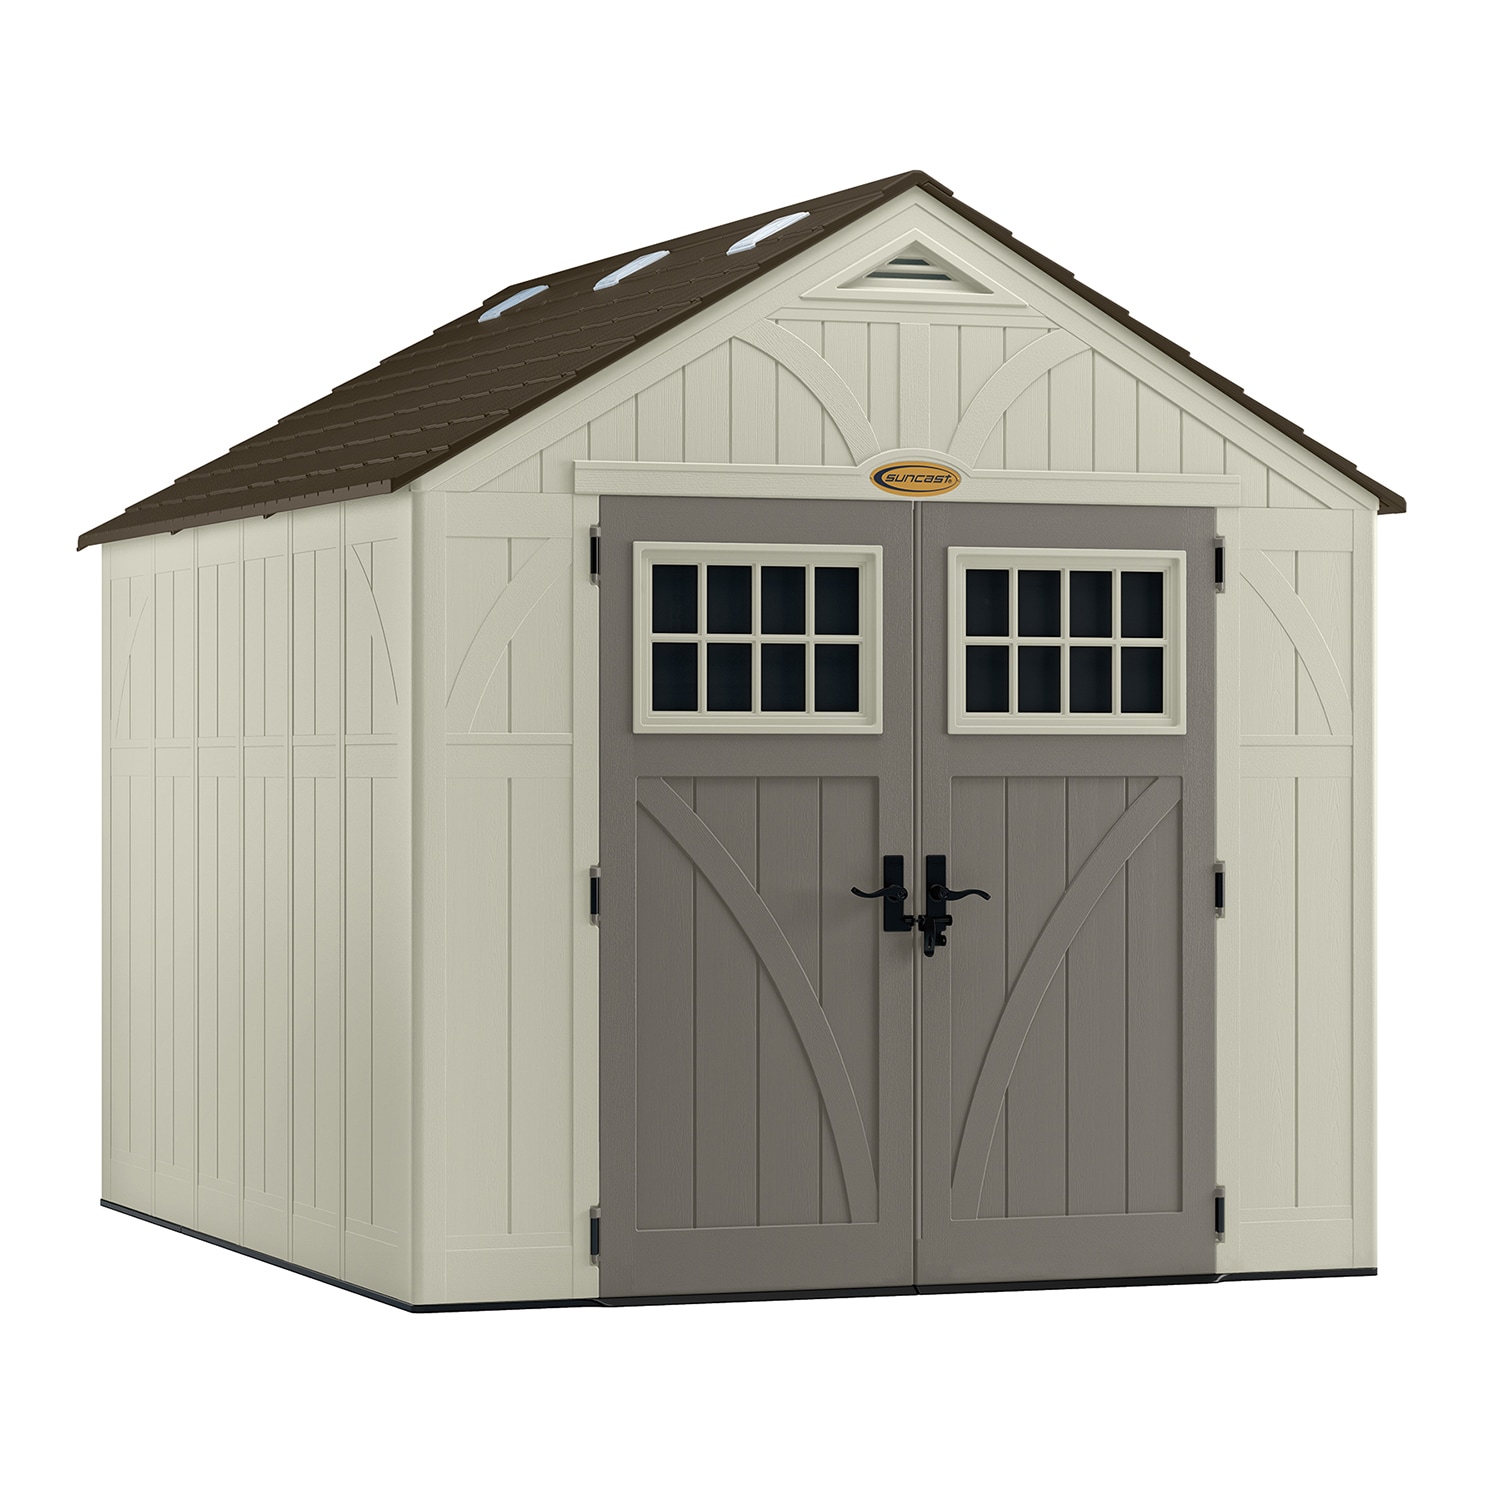 Tremont 8x10 storage shed 1